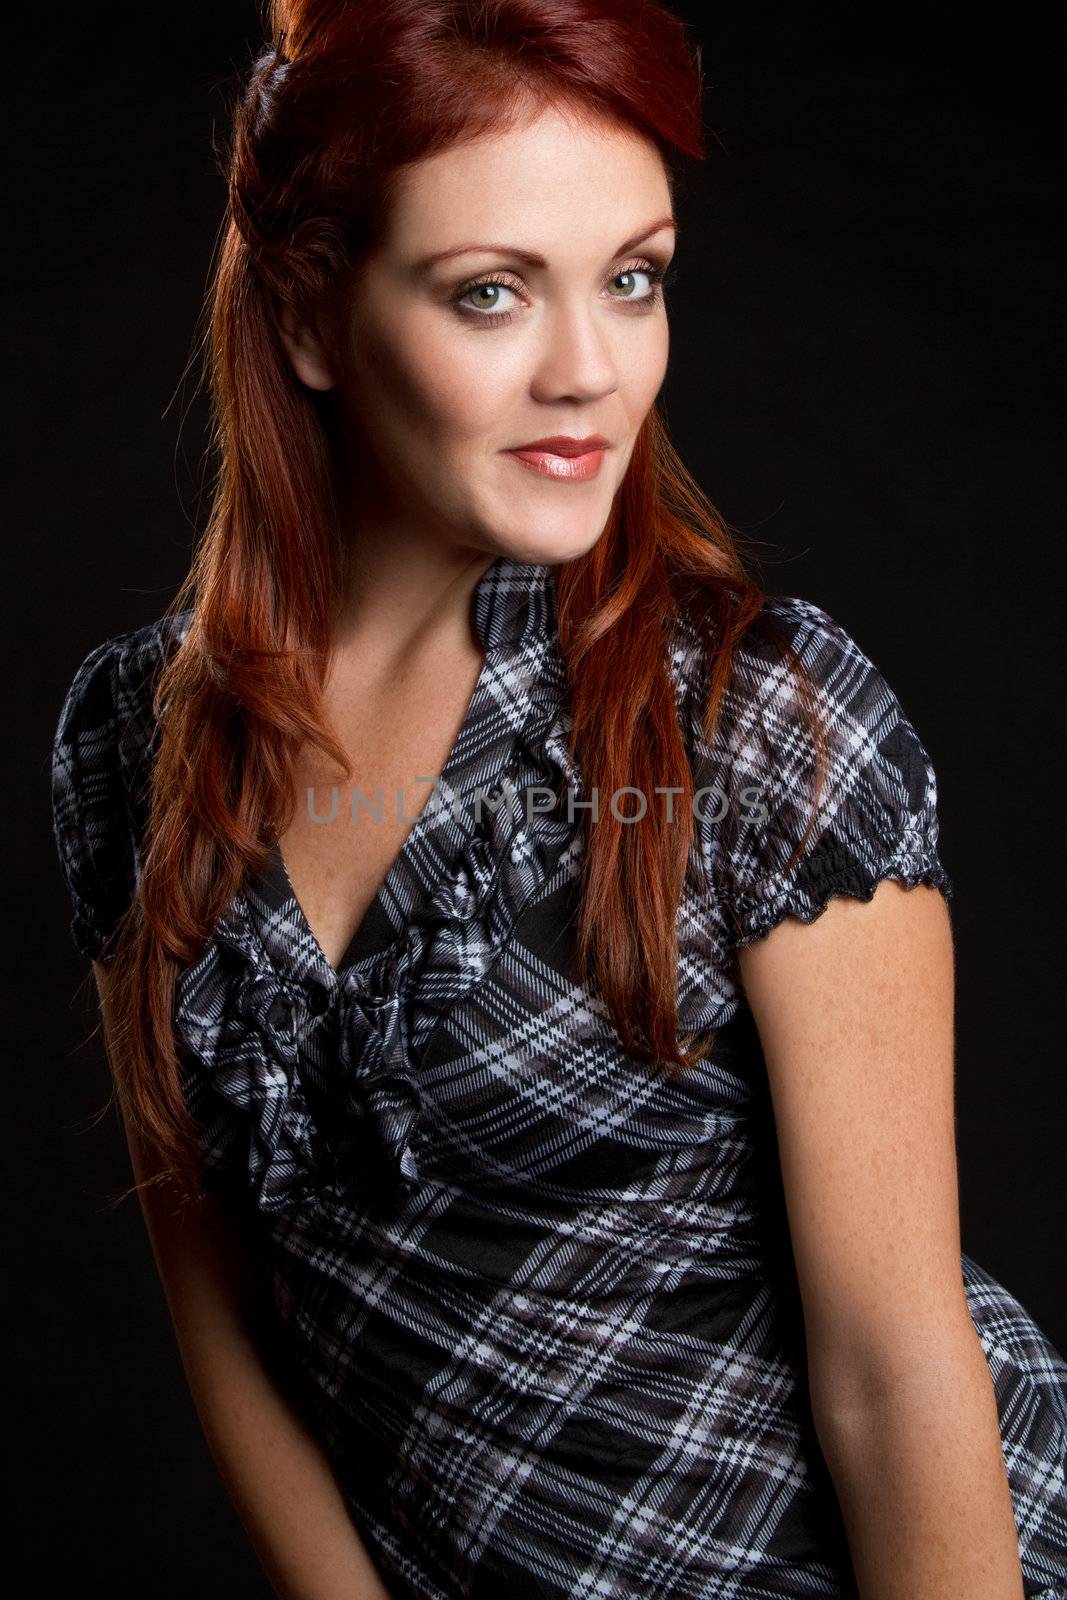 Beautiful young redhead woman smiling